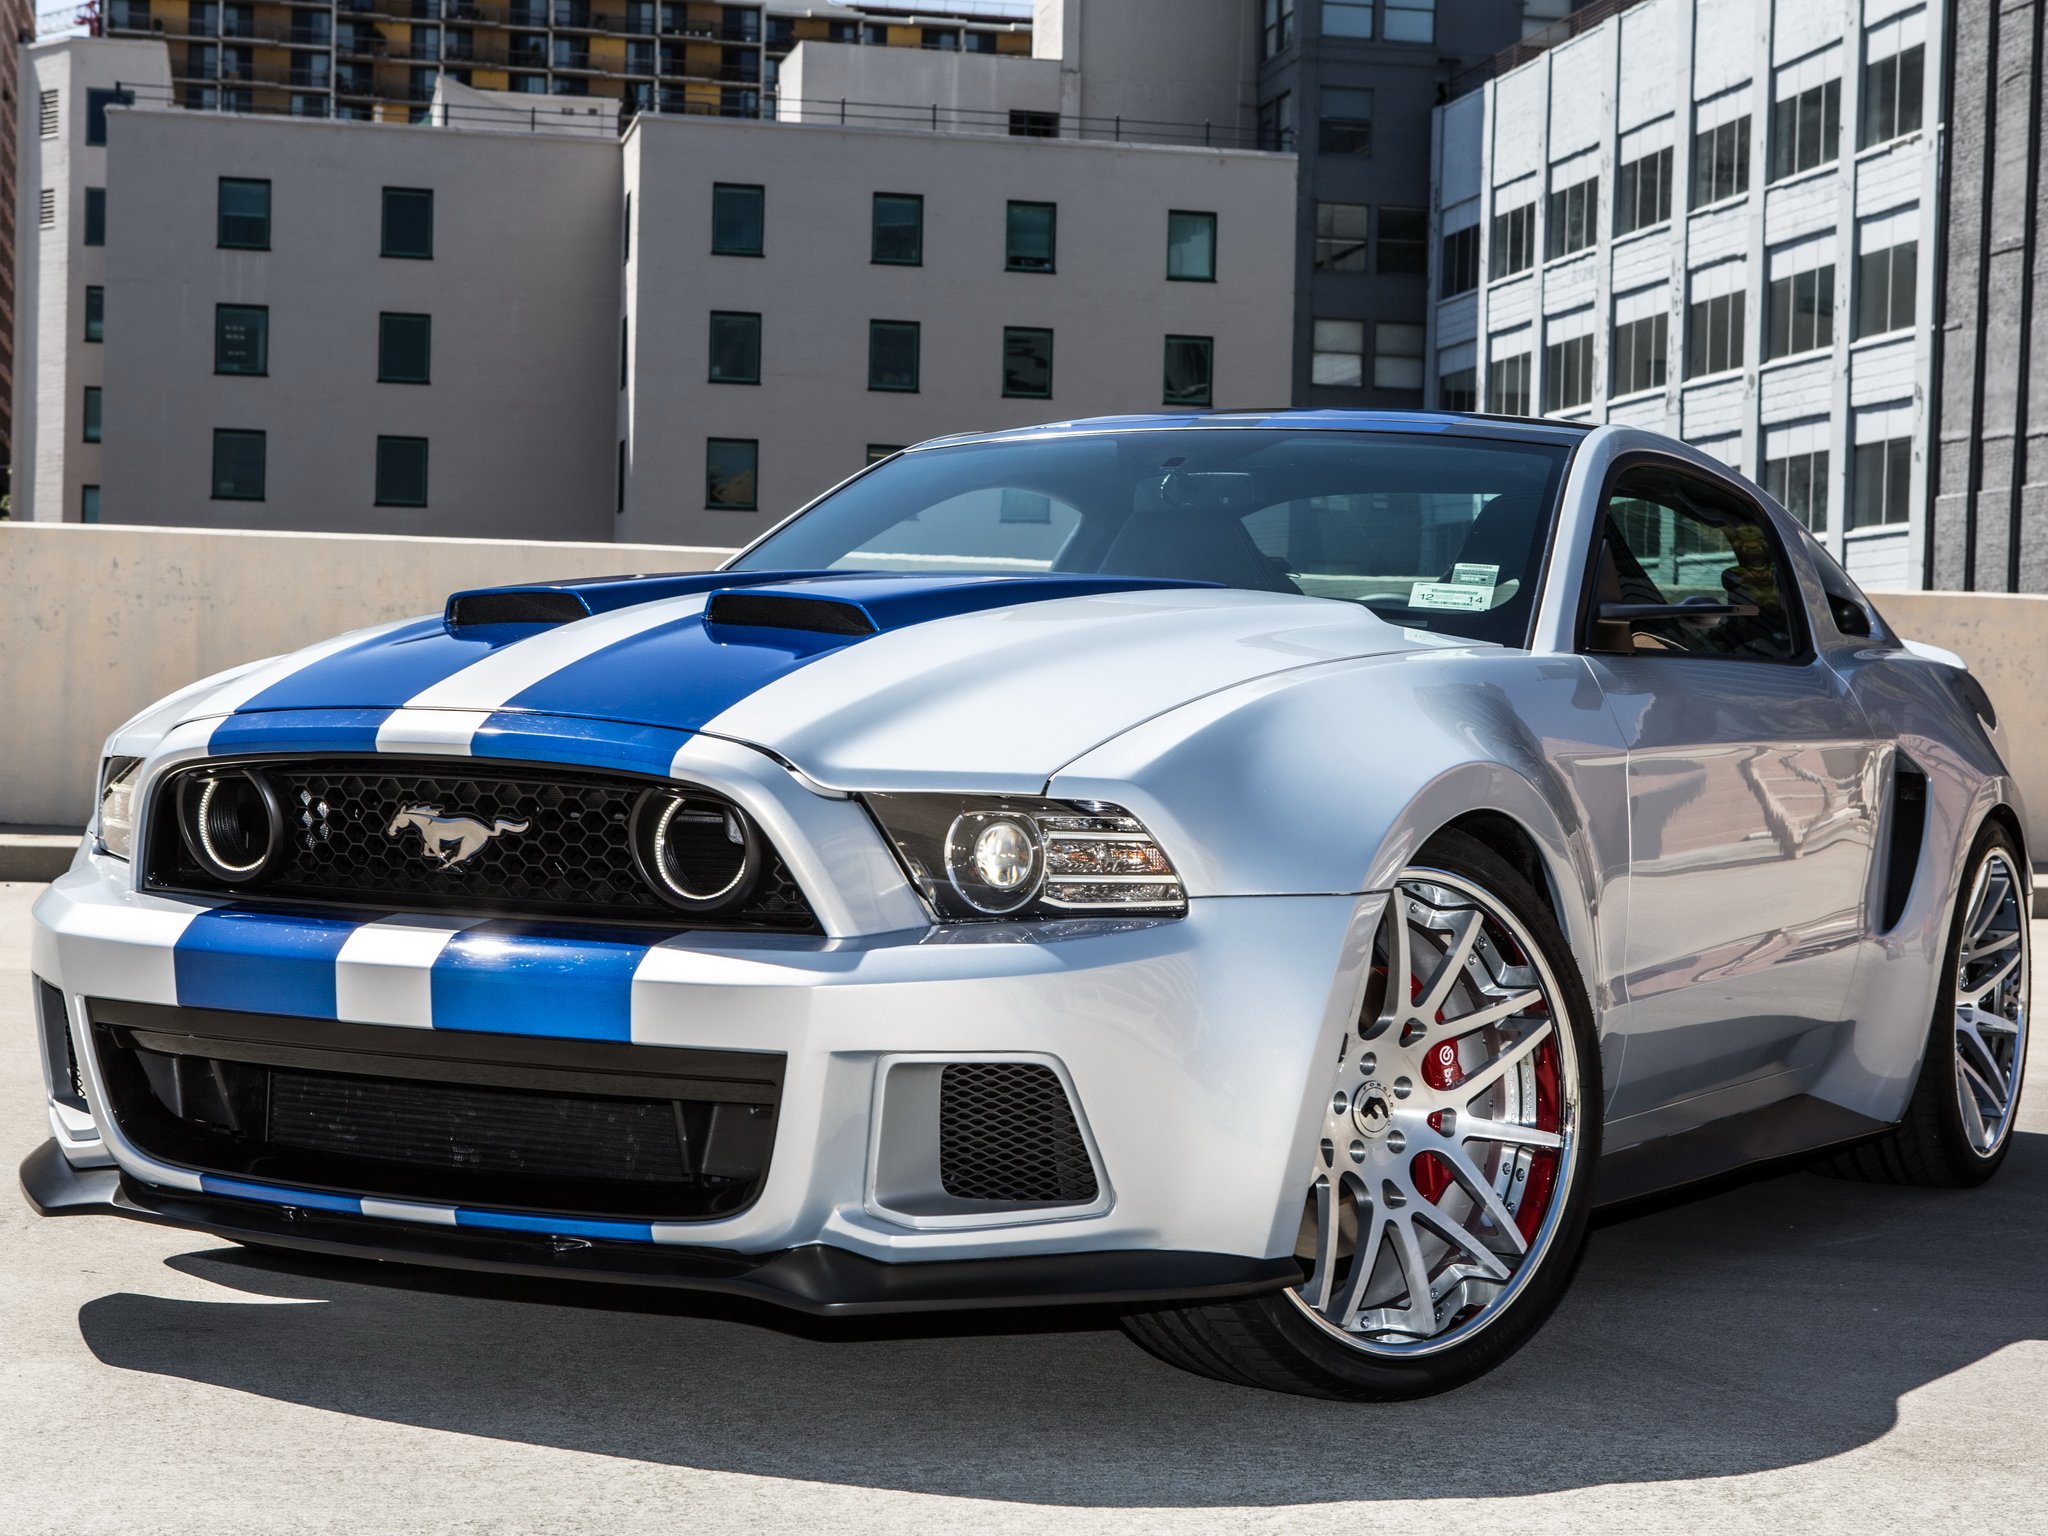 🔥 47 Mustang Need For Speed Wallpaper Wallpapersafari